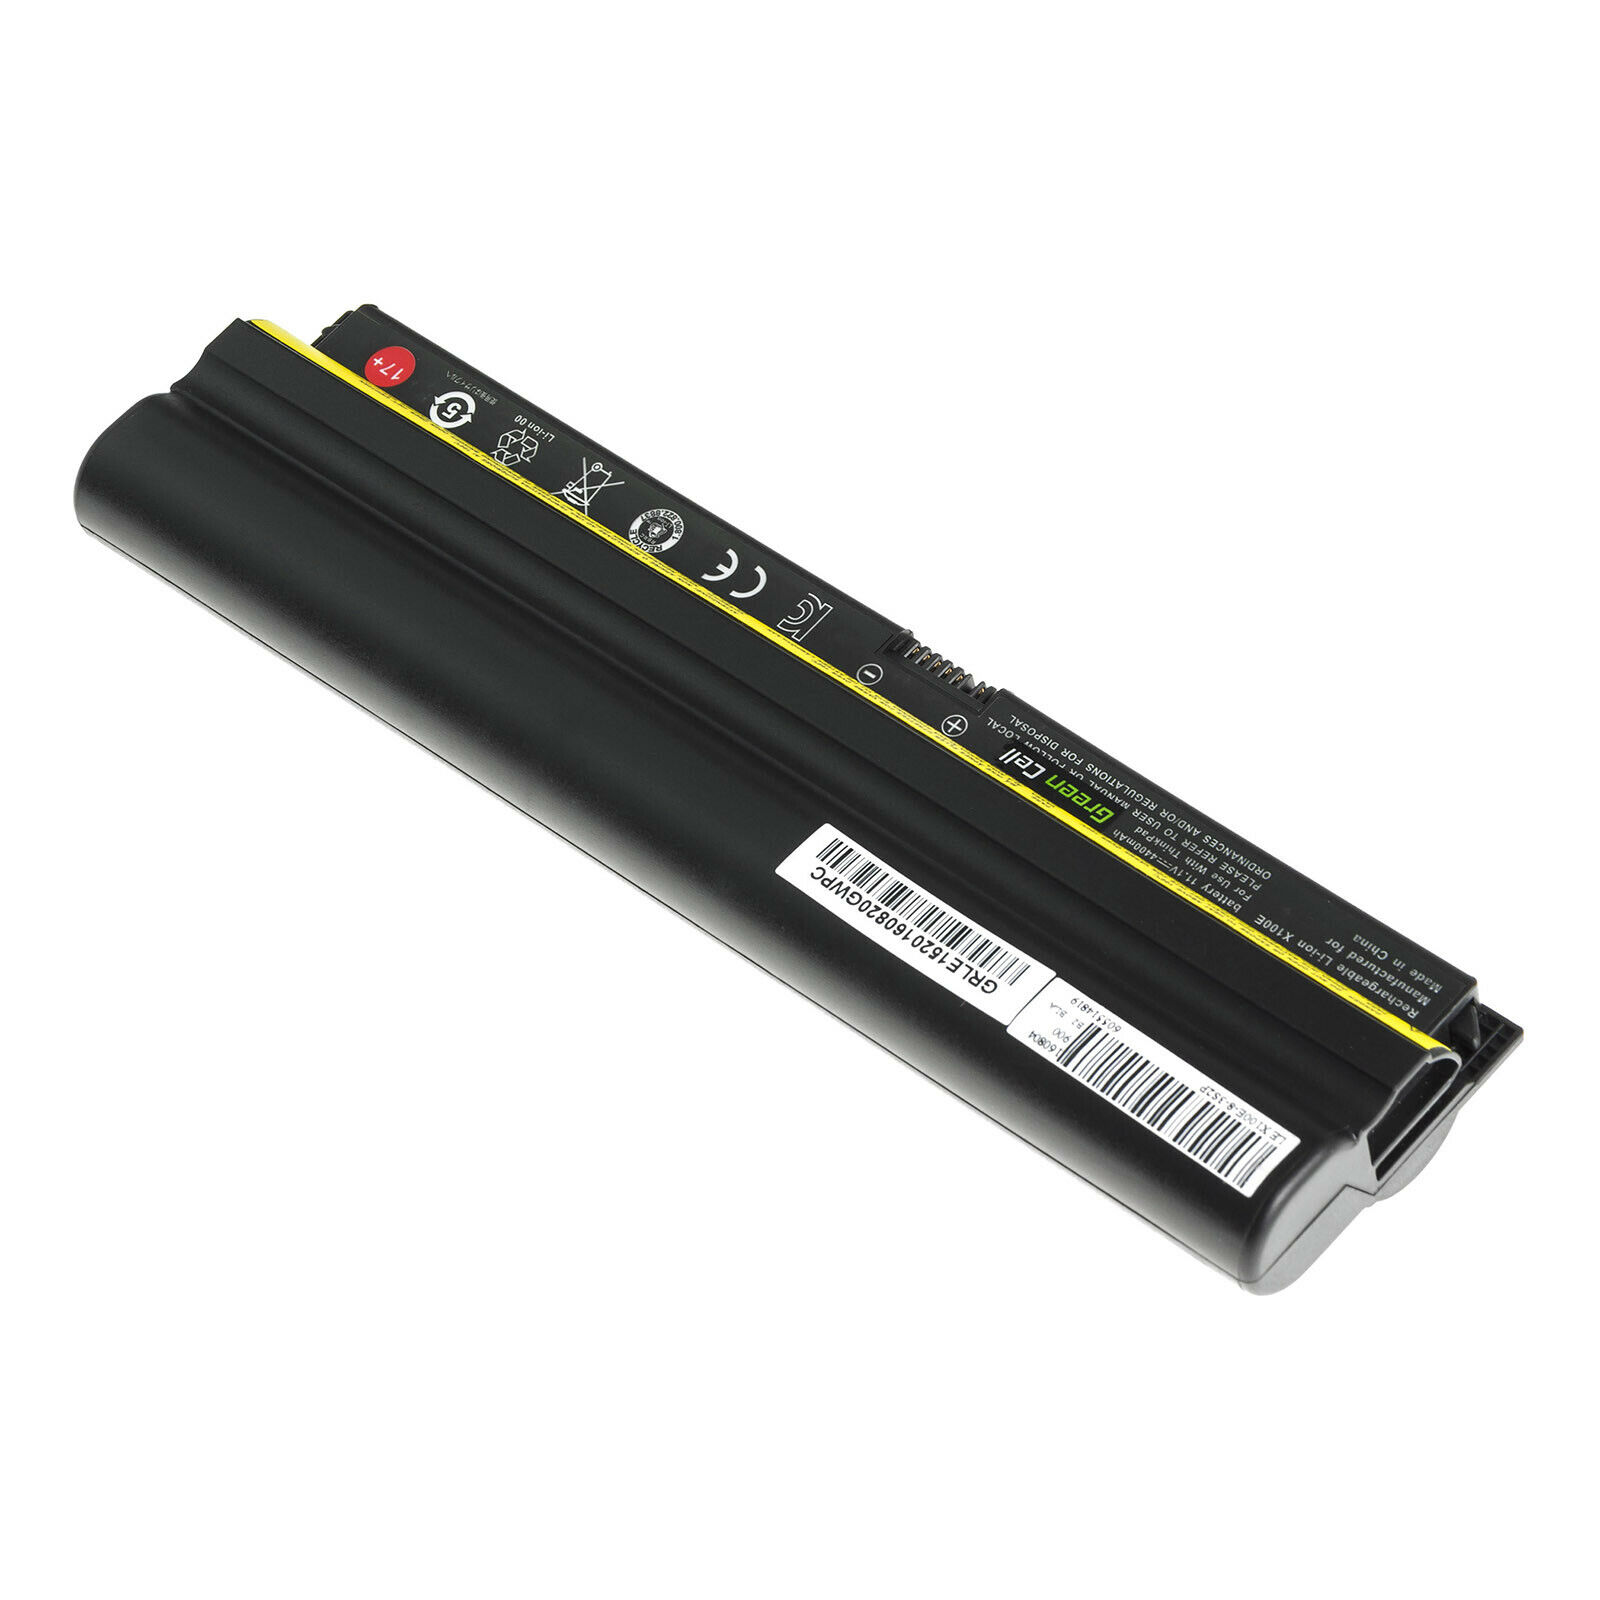 Lenovo 42T4786 42T4787 Thinkpad X100e X120e compatible battery